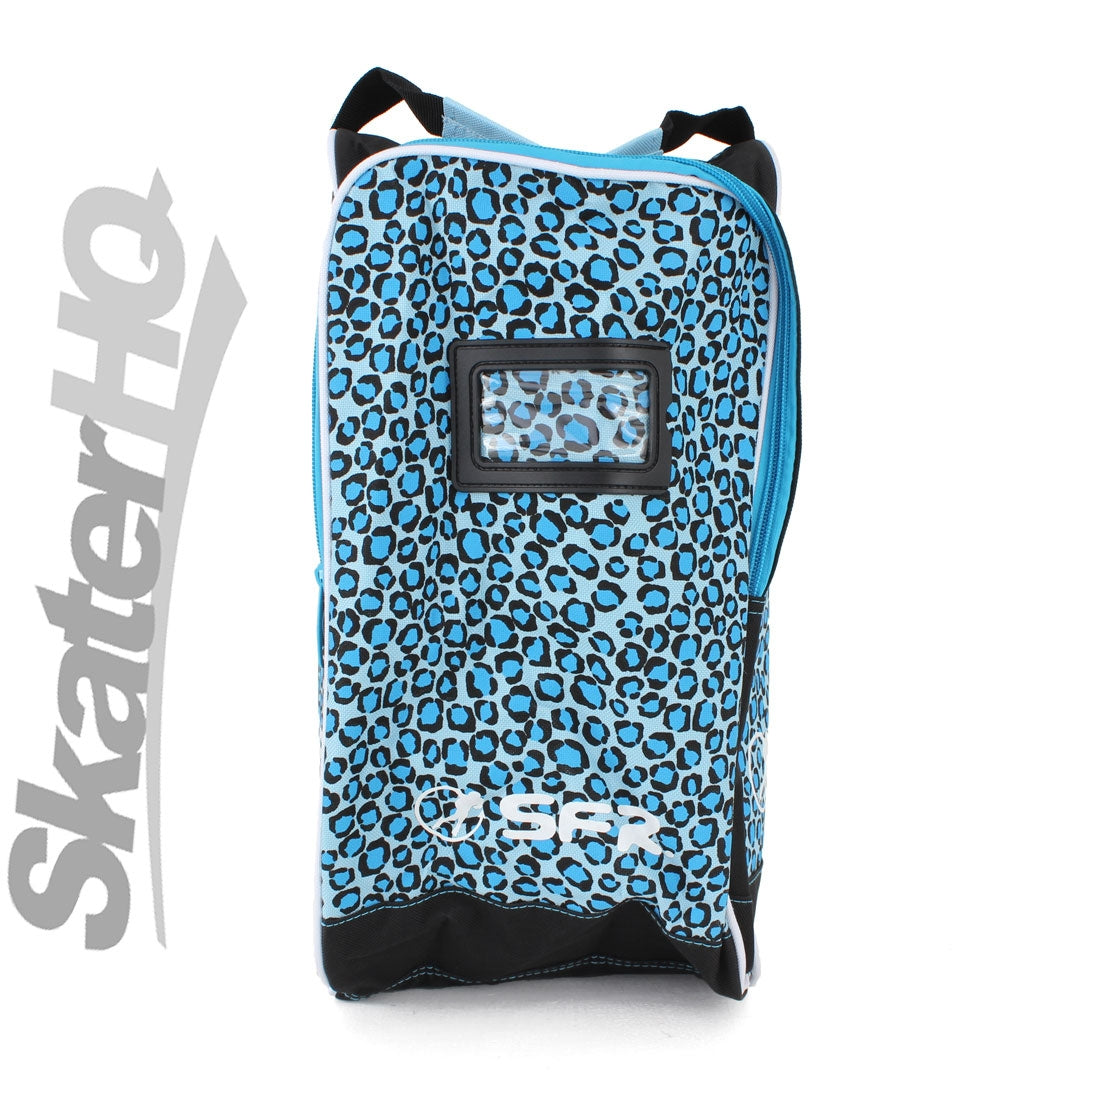 SFR Skate Bag - Blue Leopard Bags and Backpacks